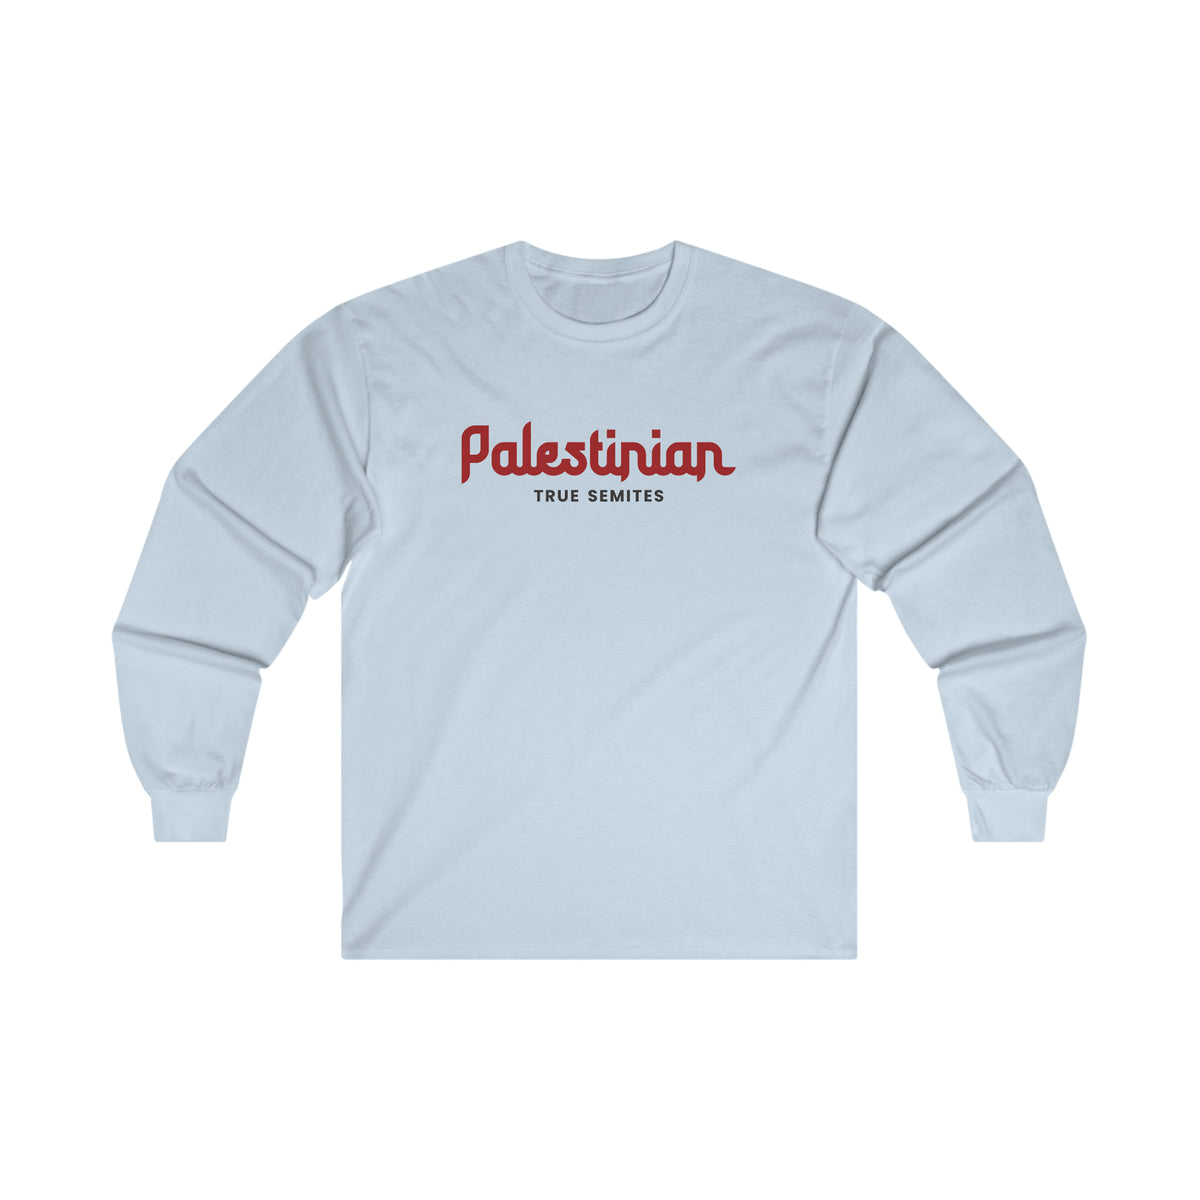 Palestinian Semite LGY RD Long Sleeve Tee